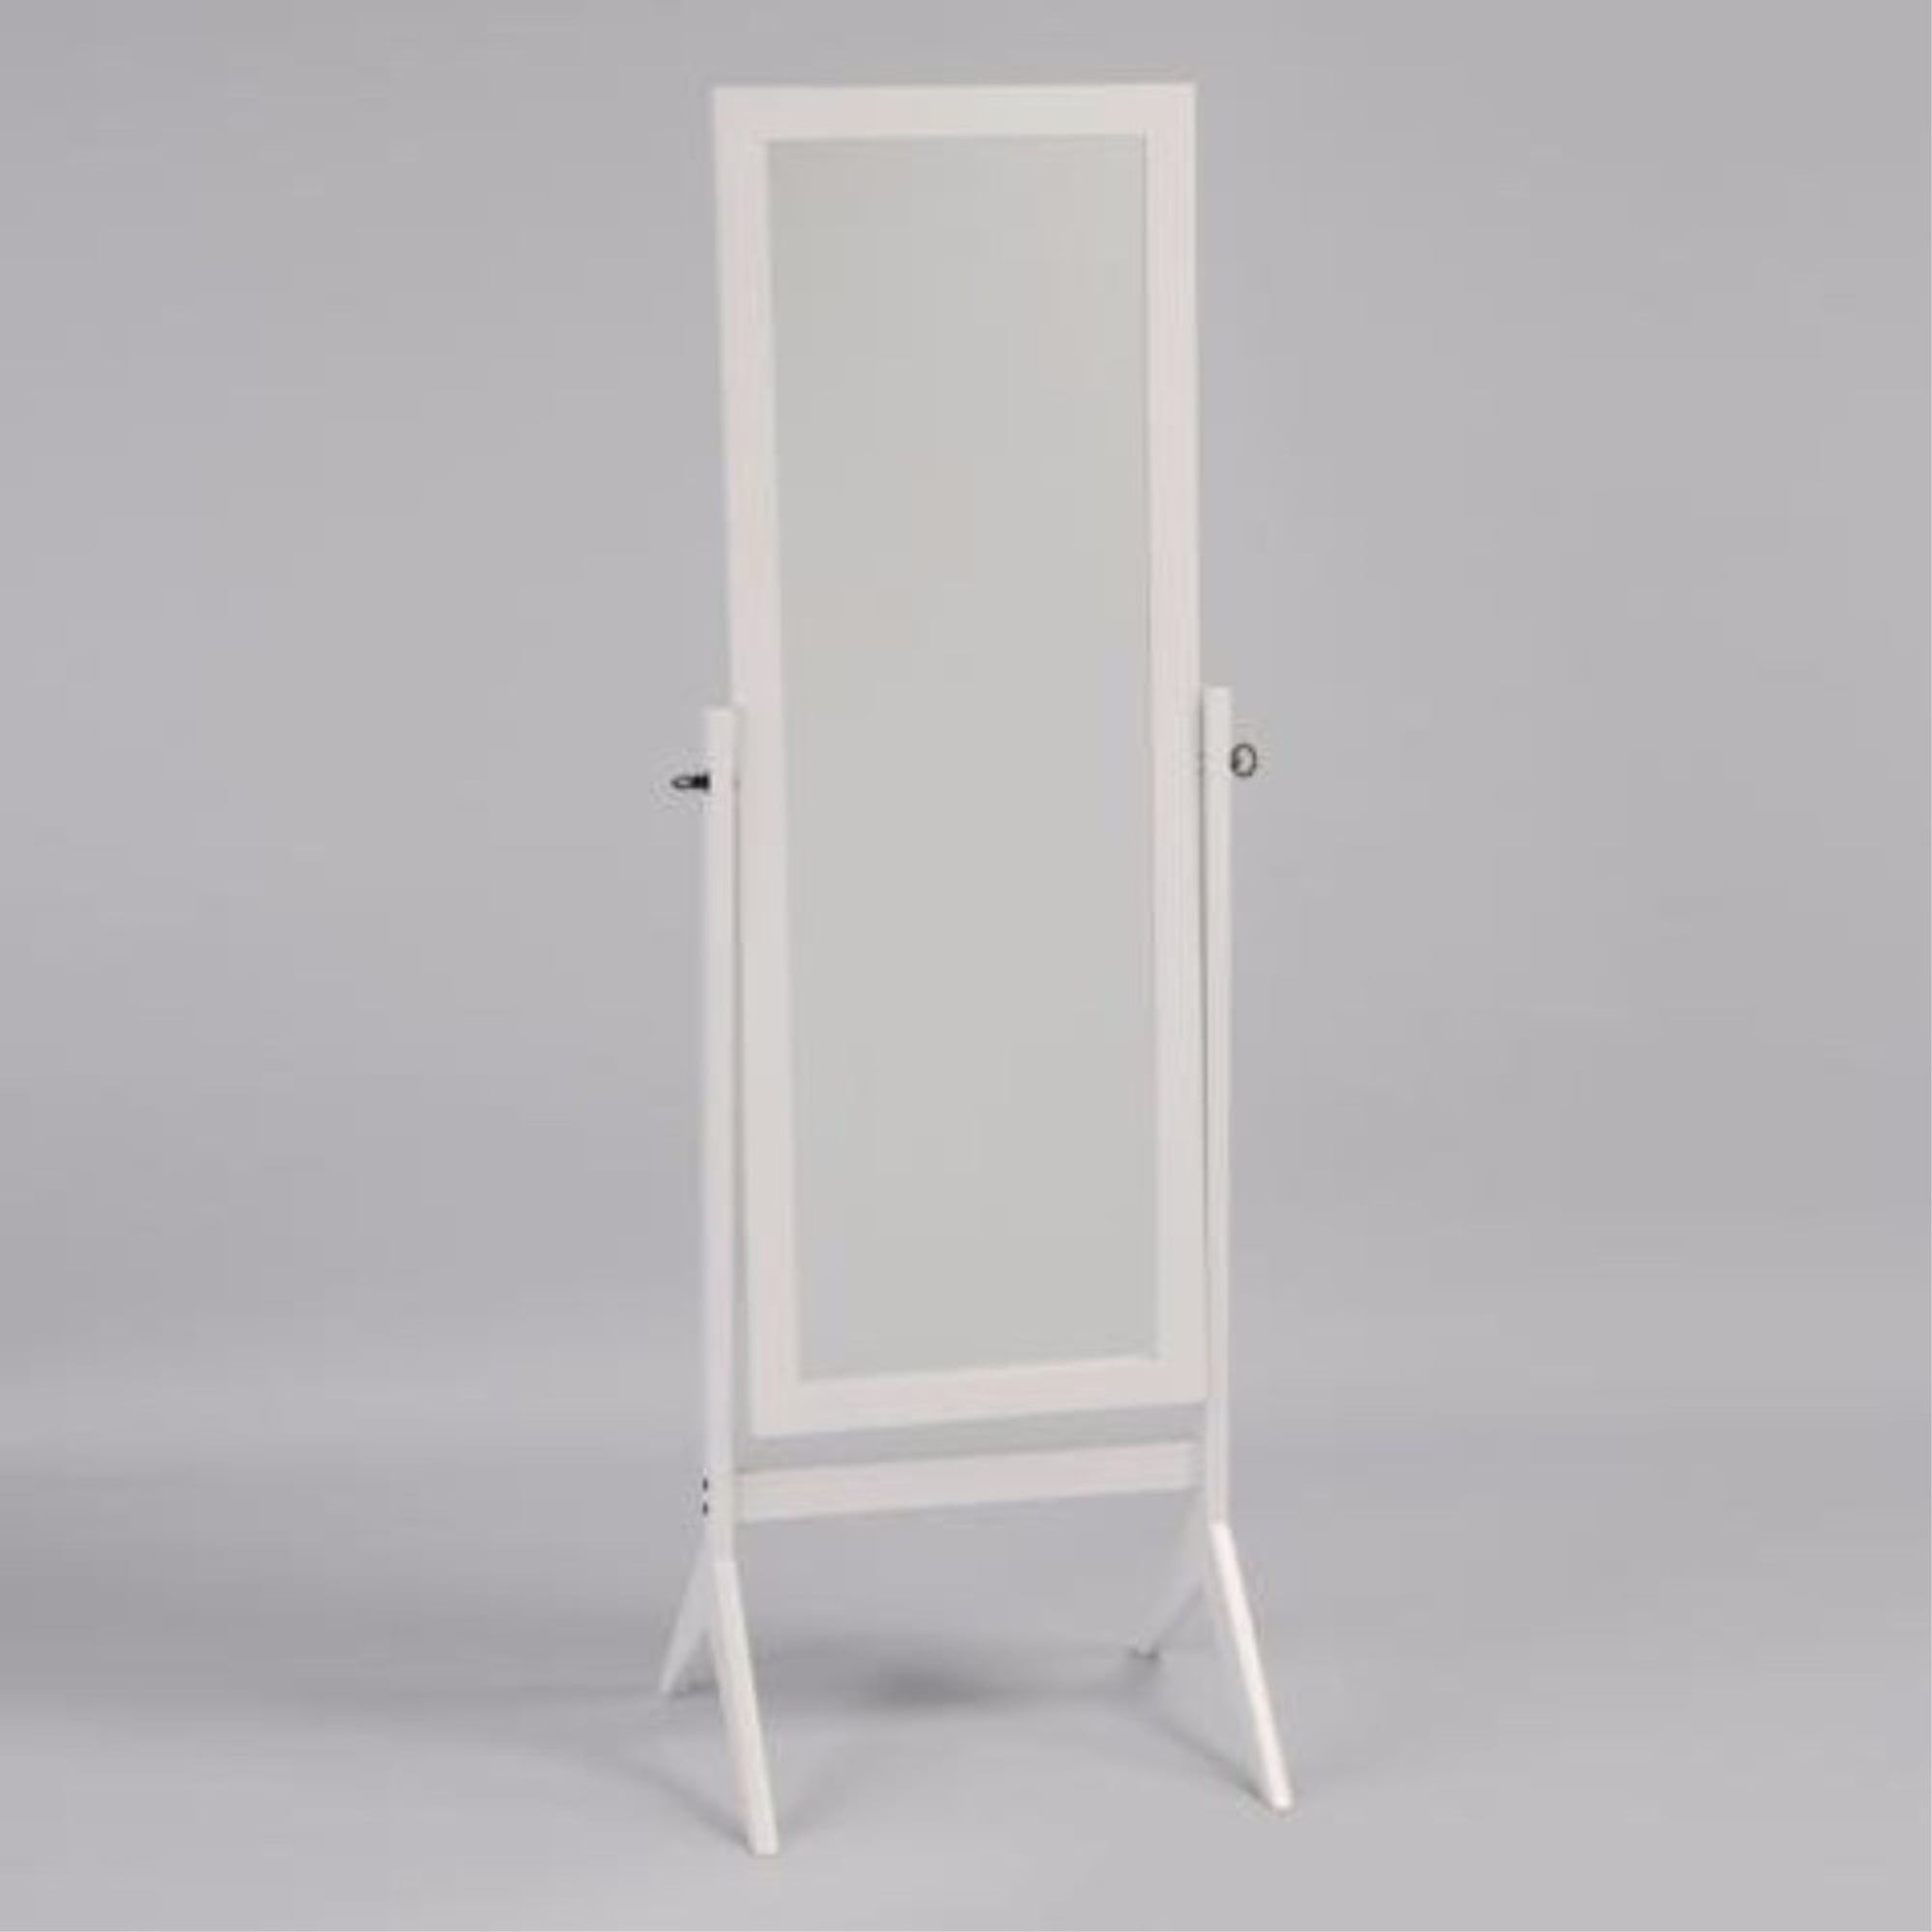 Details about   Hongville Wood Rectangular Oval Cheval Floor Mirror Free Standing Mirror 